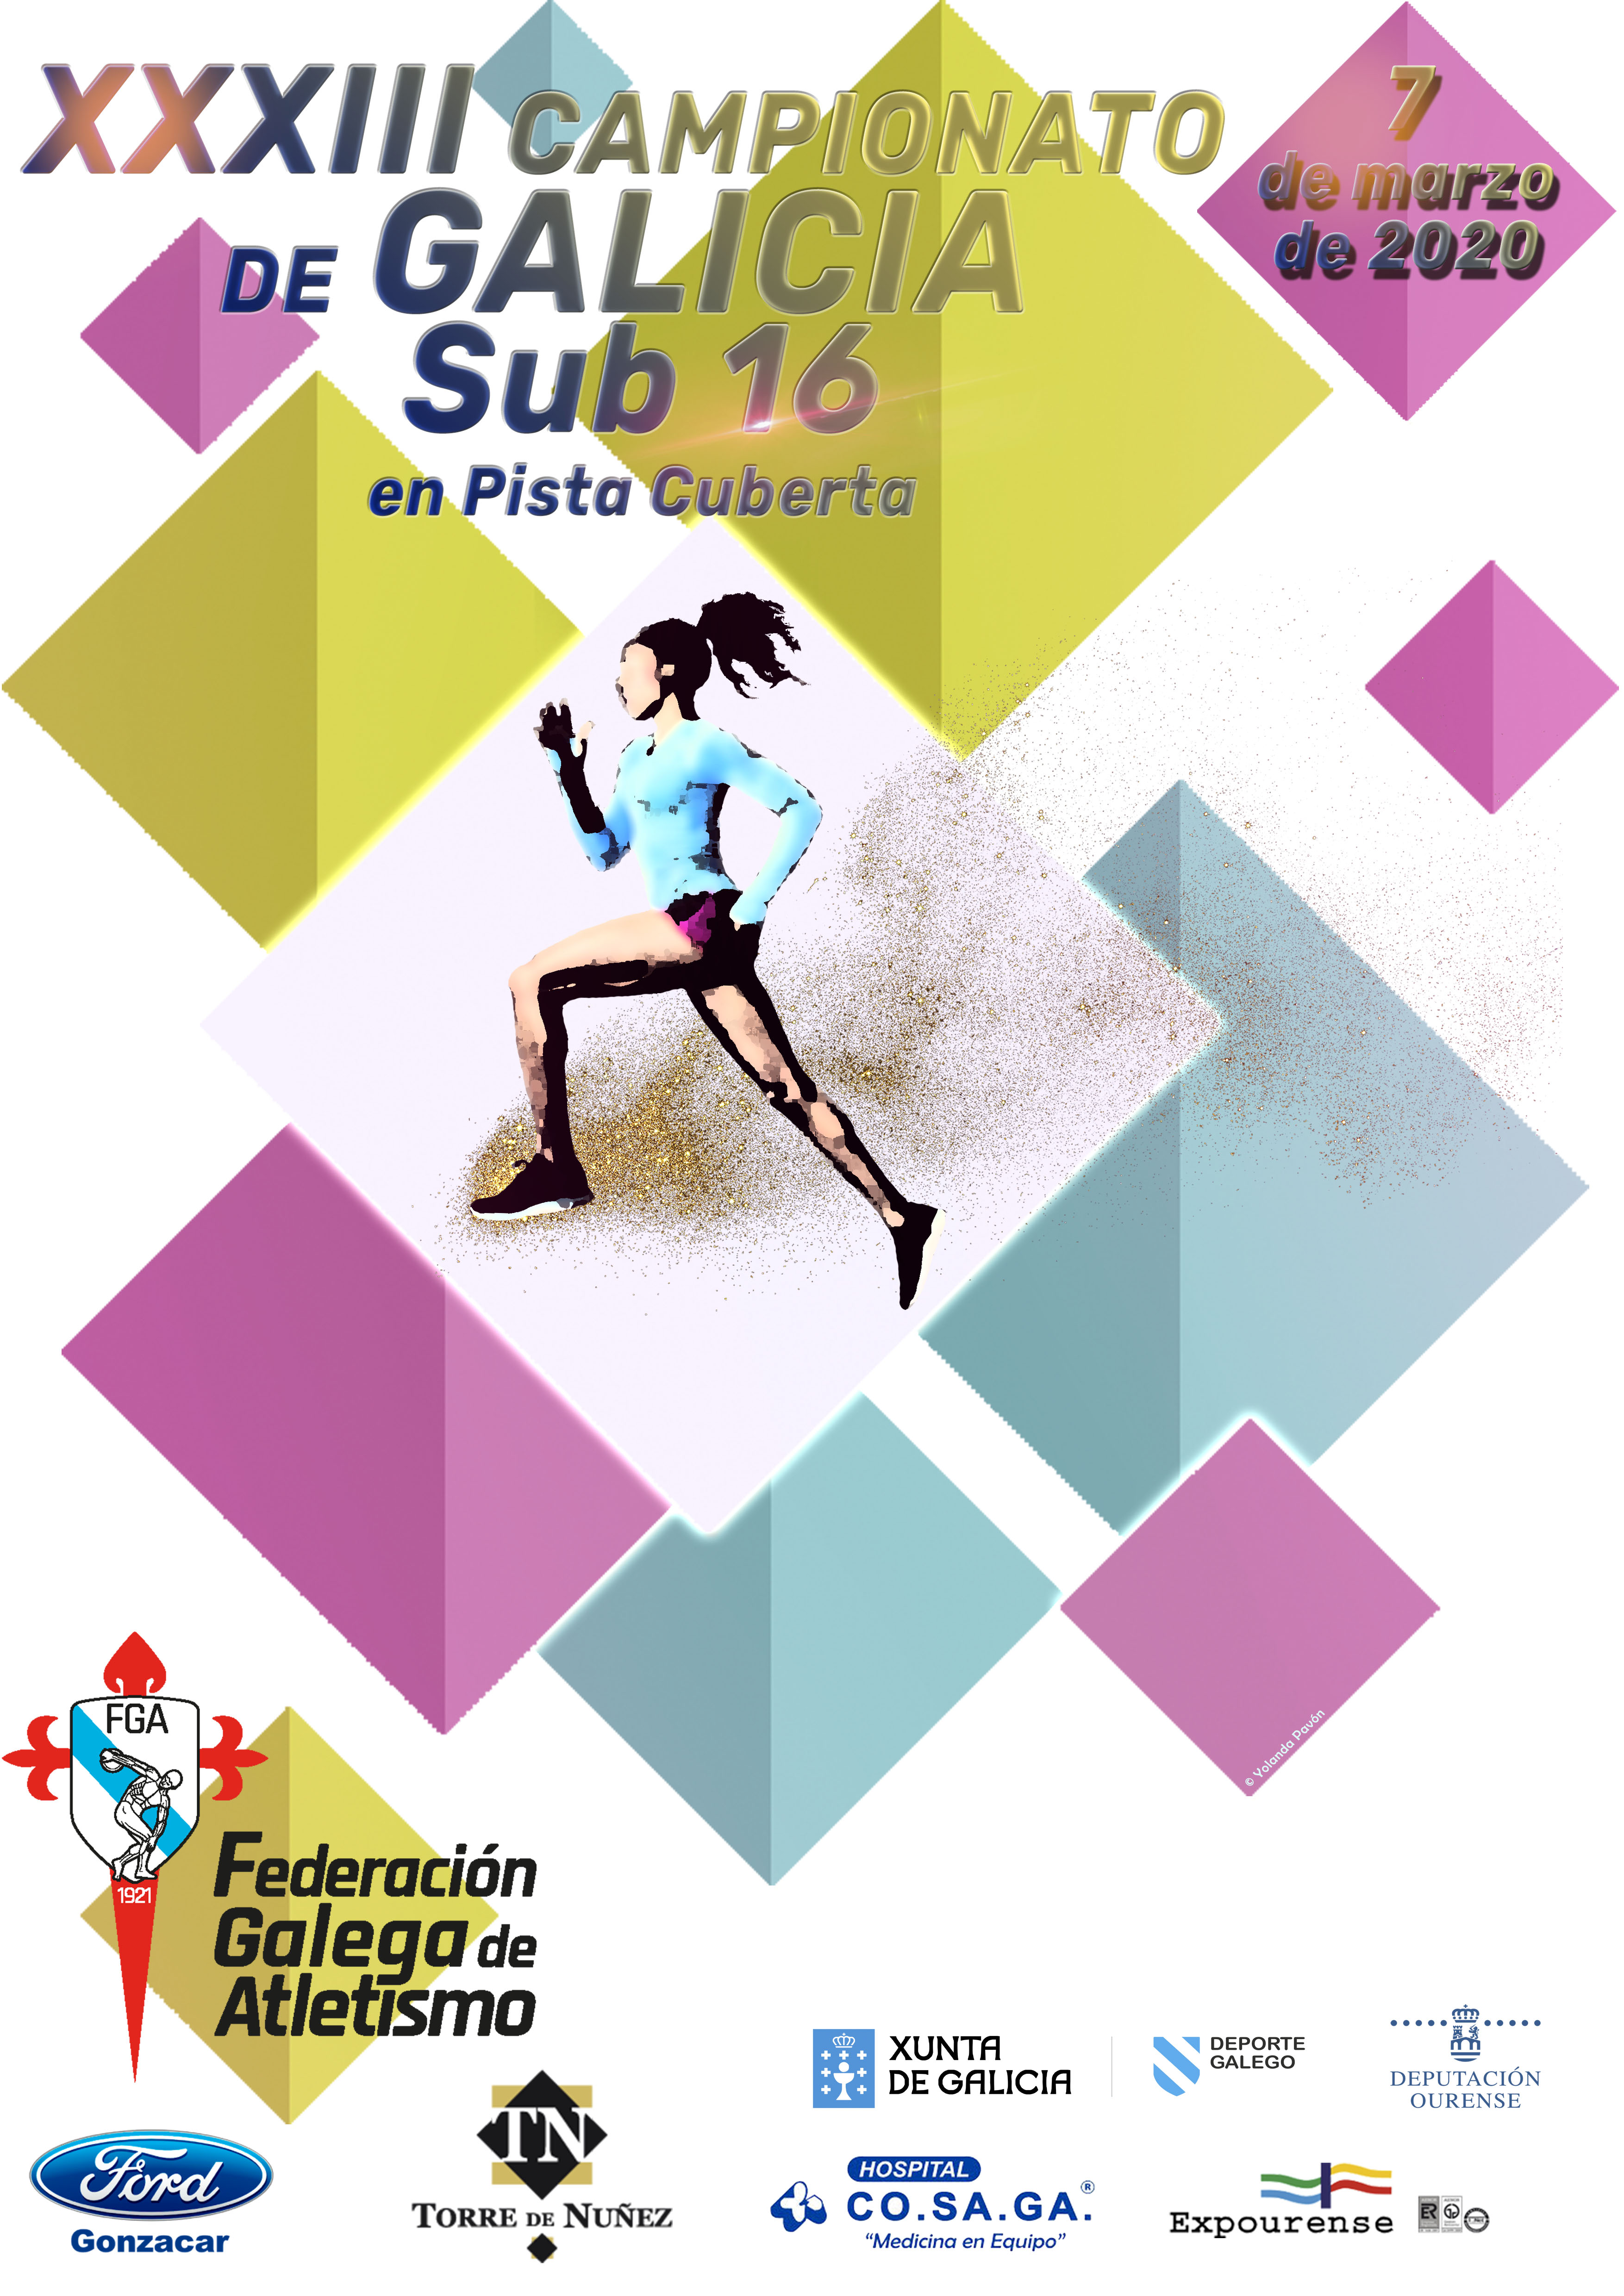 XXXIII Campionato de Galicia Sub16 en Pista Cuberta